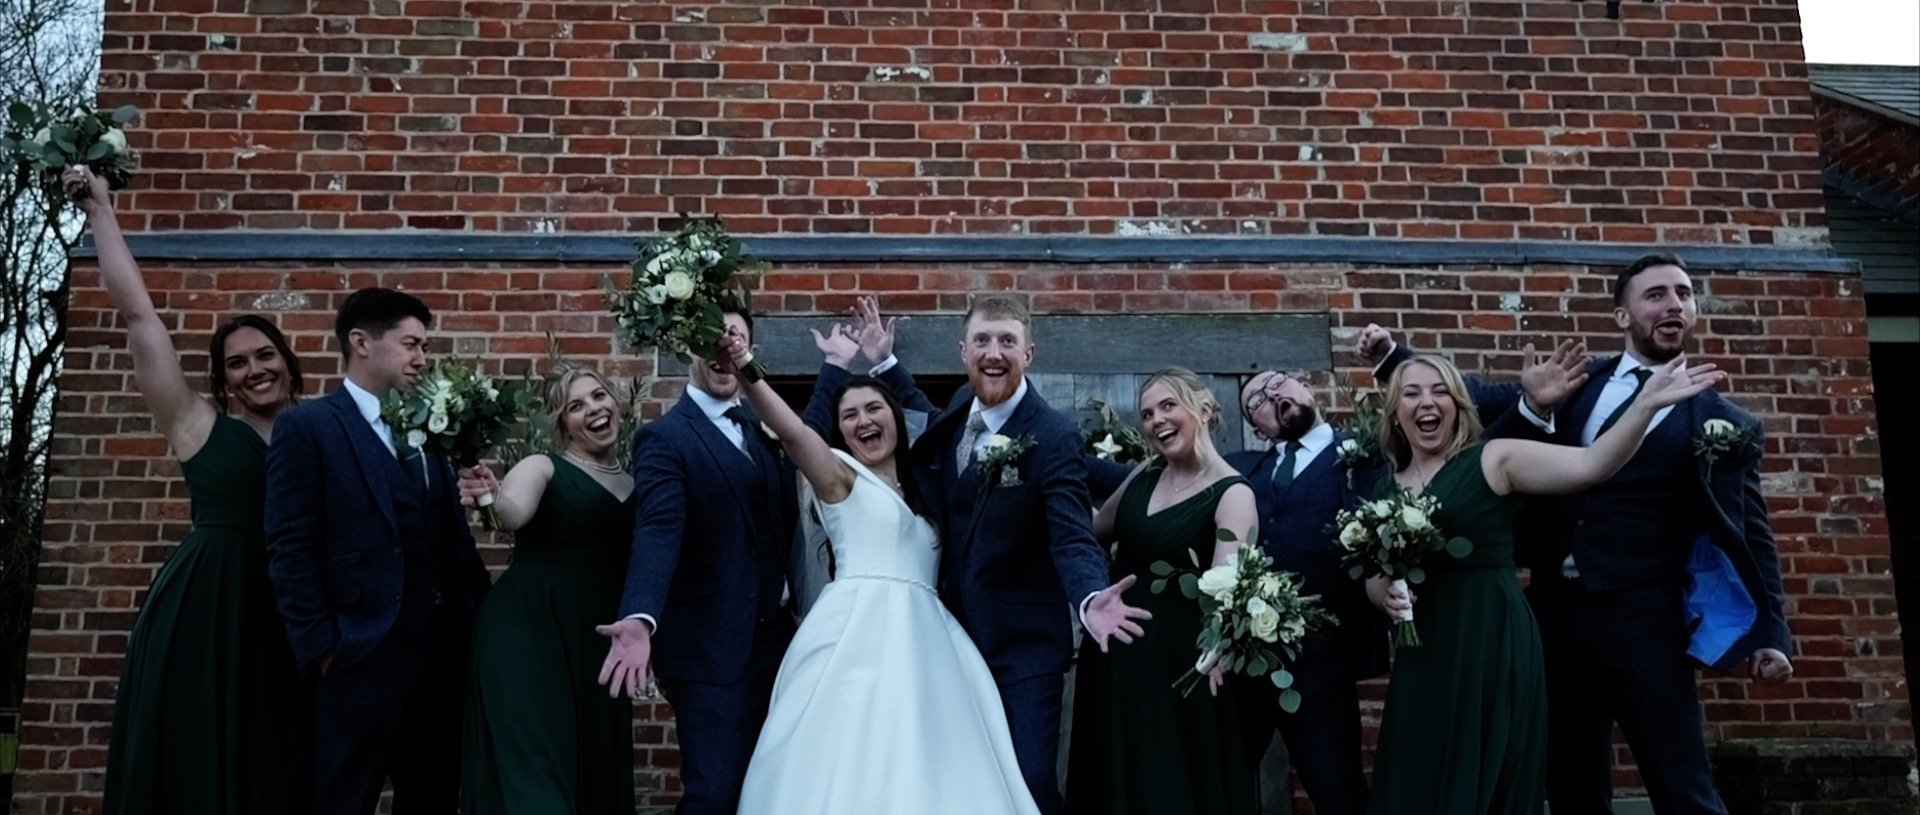 Apton Hall Wedding Videography - 3 Cheers Media - Bridal Party Photo.jpg